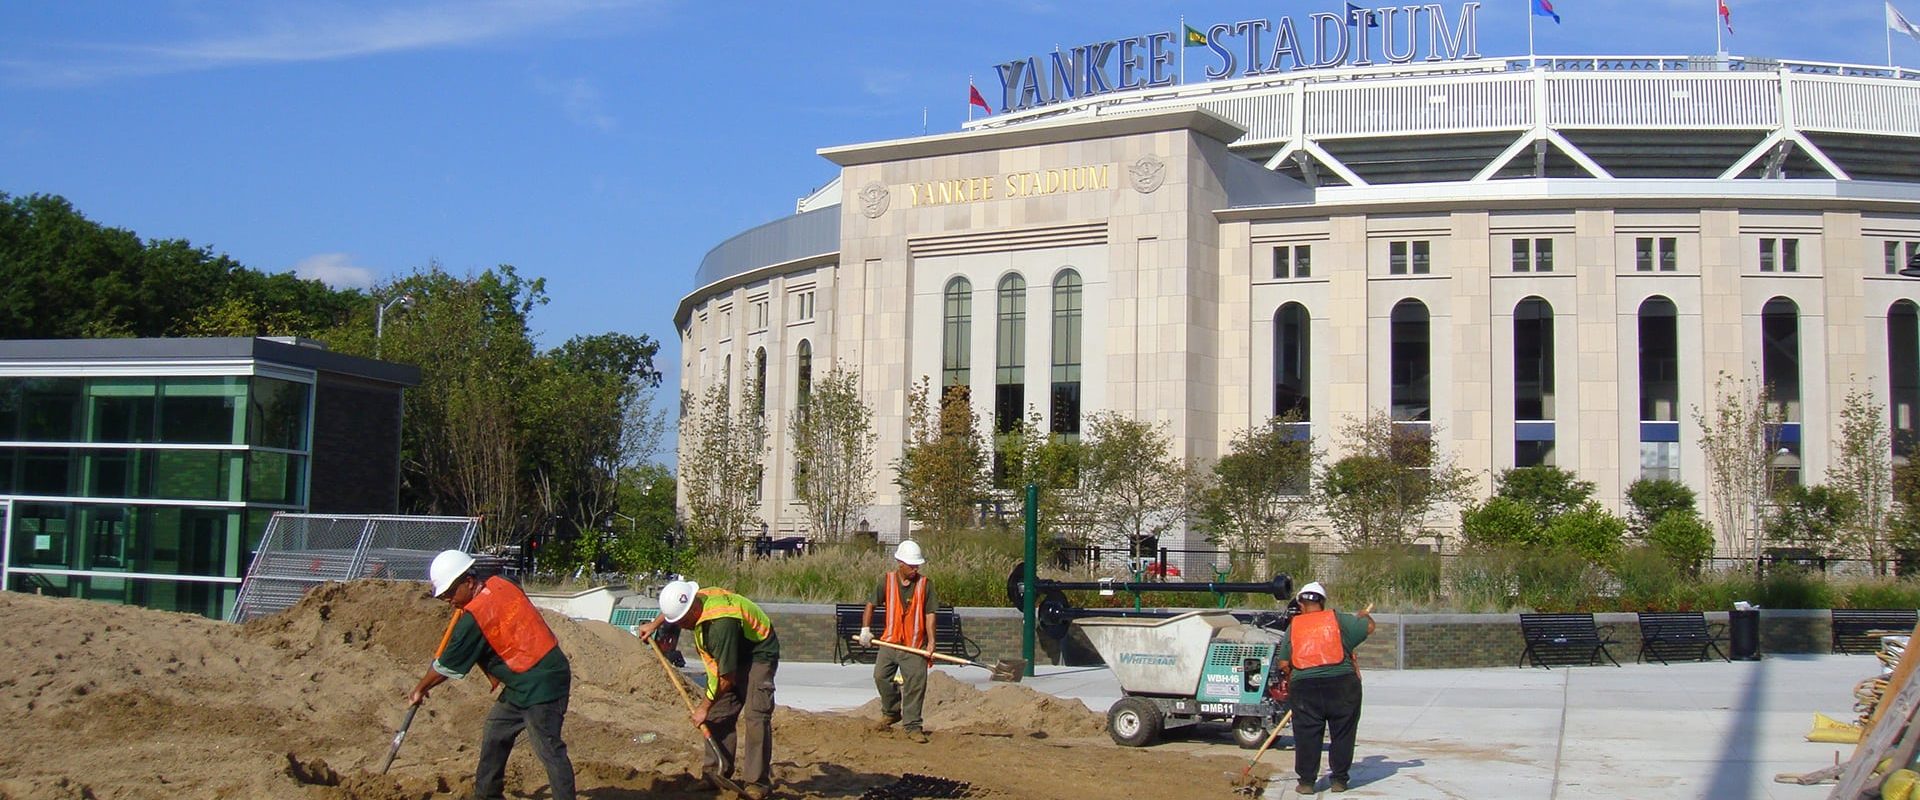 Yankee-Stadium---Sports-&-Leisure